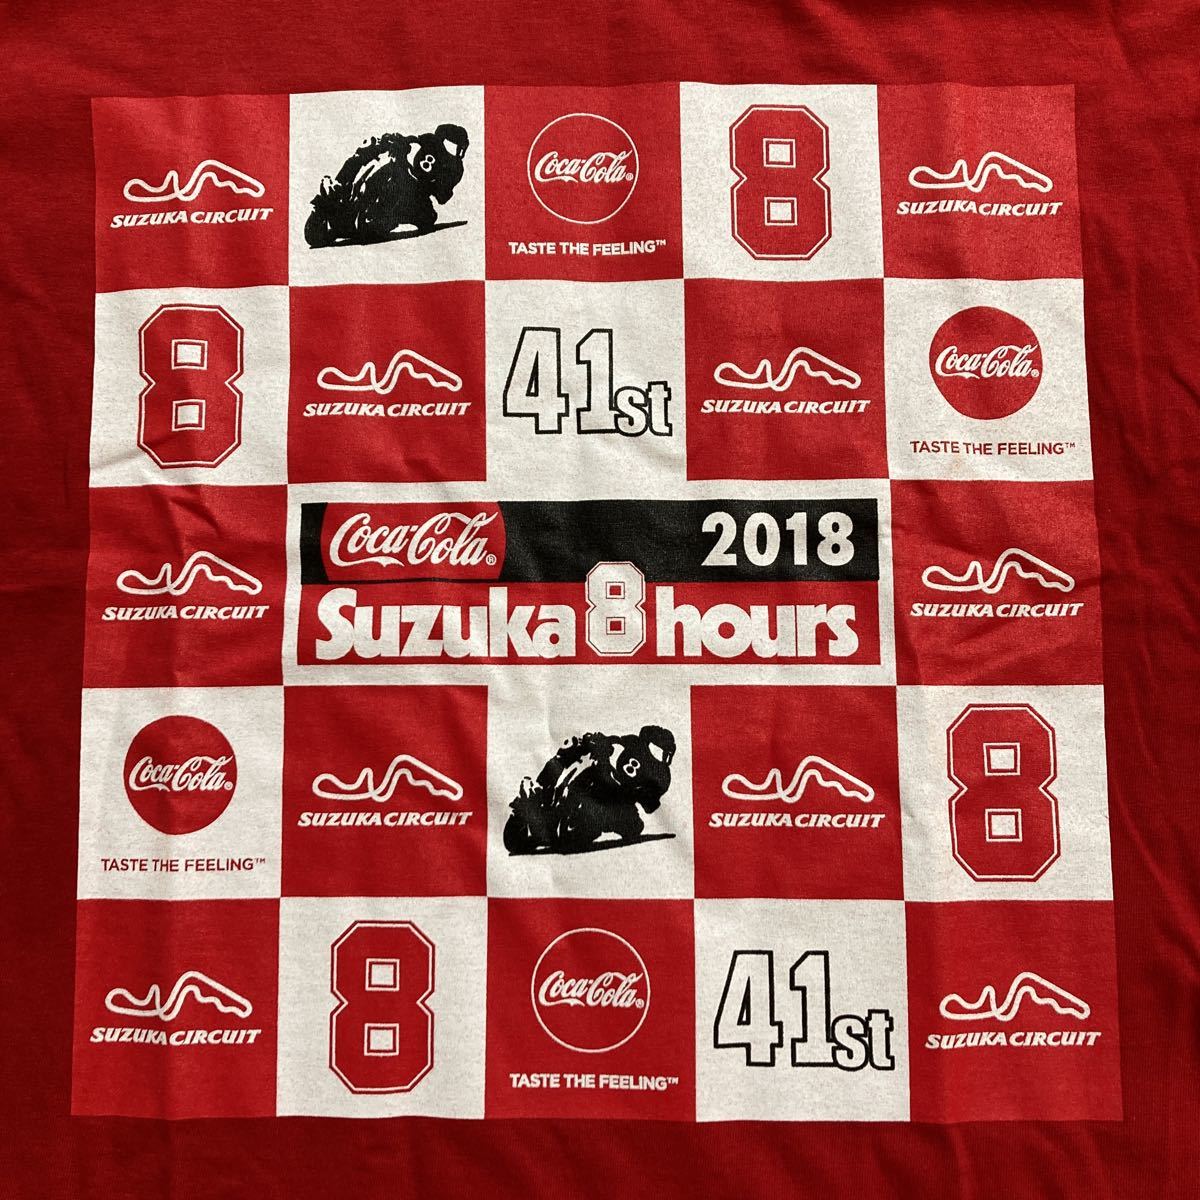 Suzuka 8 hours T-shirt Suzuka 8 hours 2018 Coca Cola футболка M размер б/у 